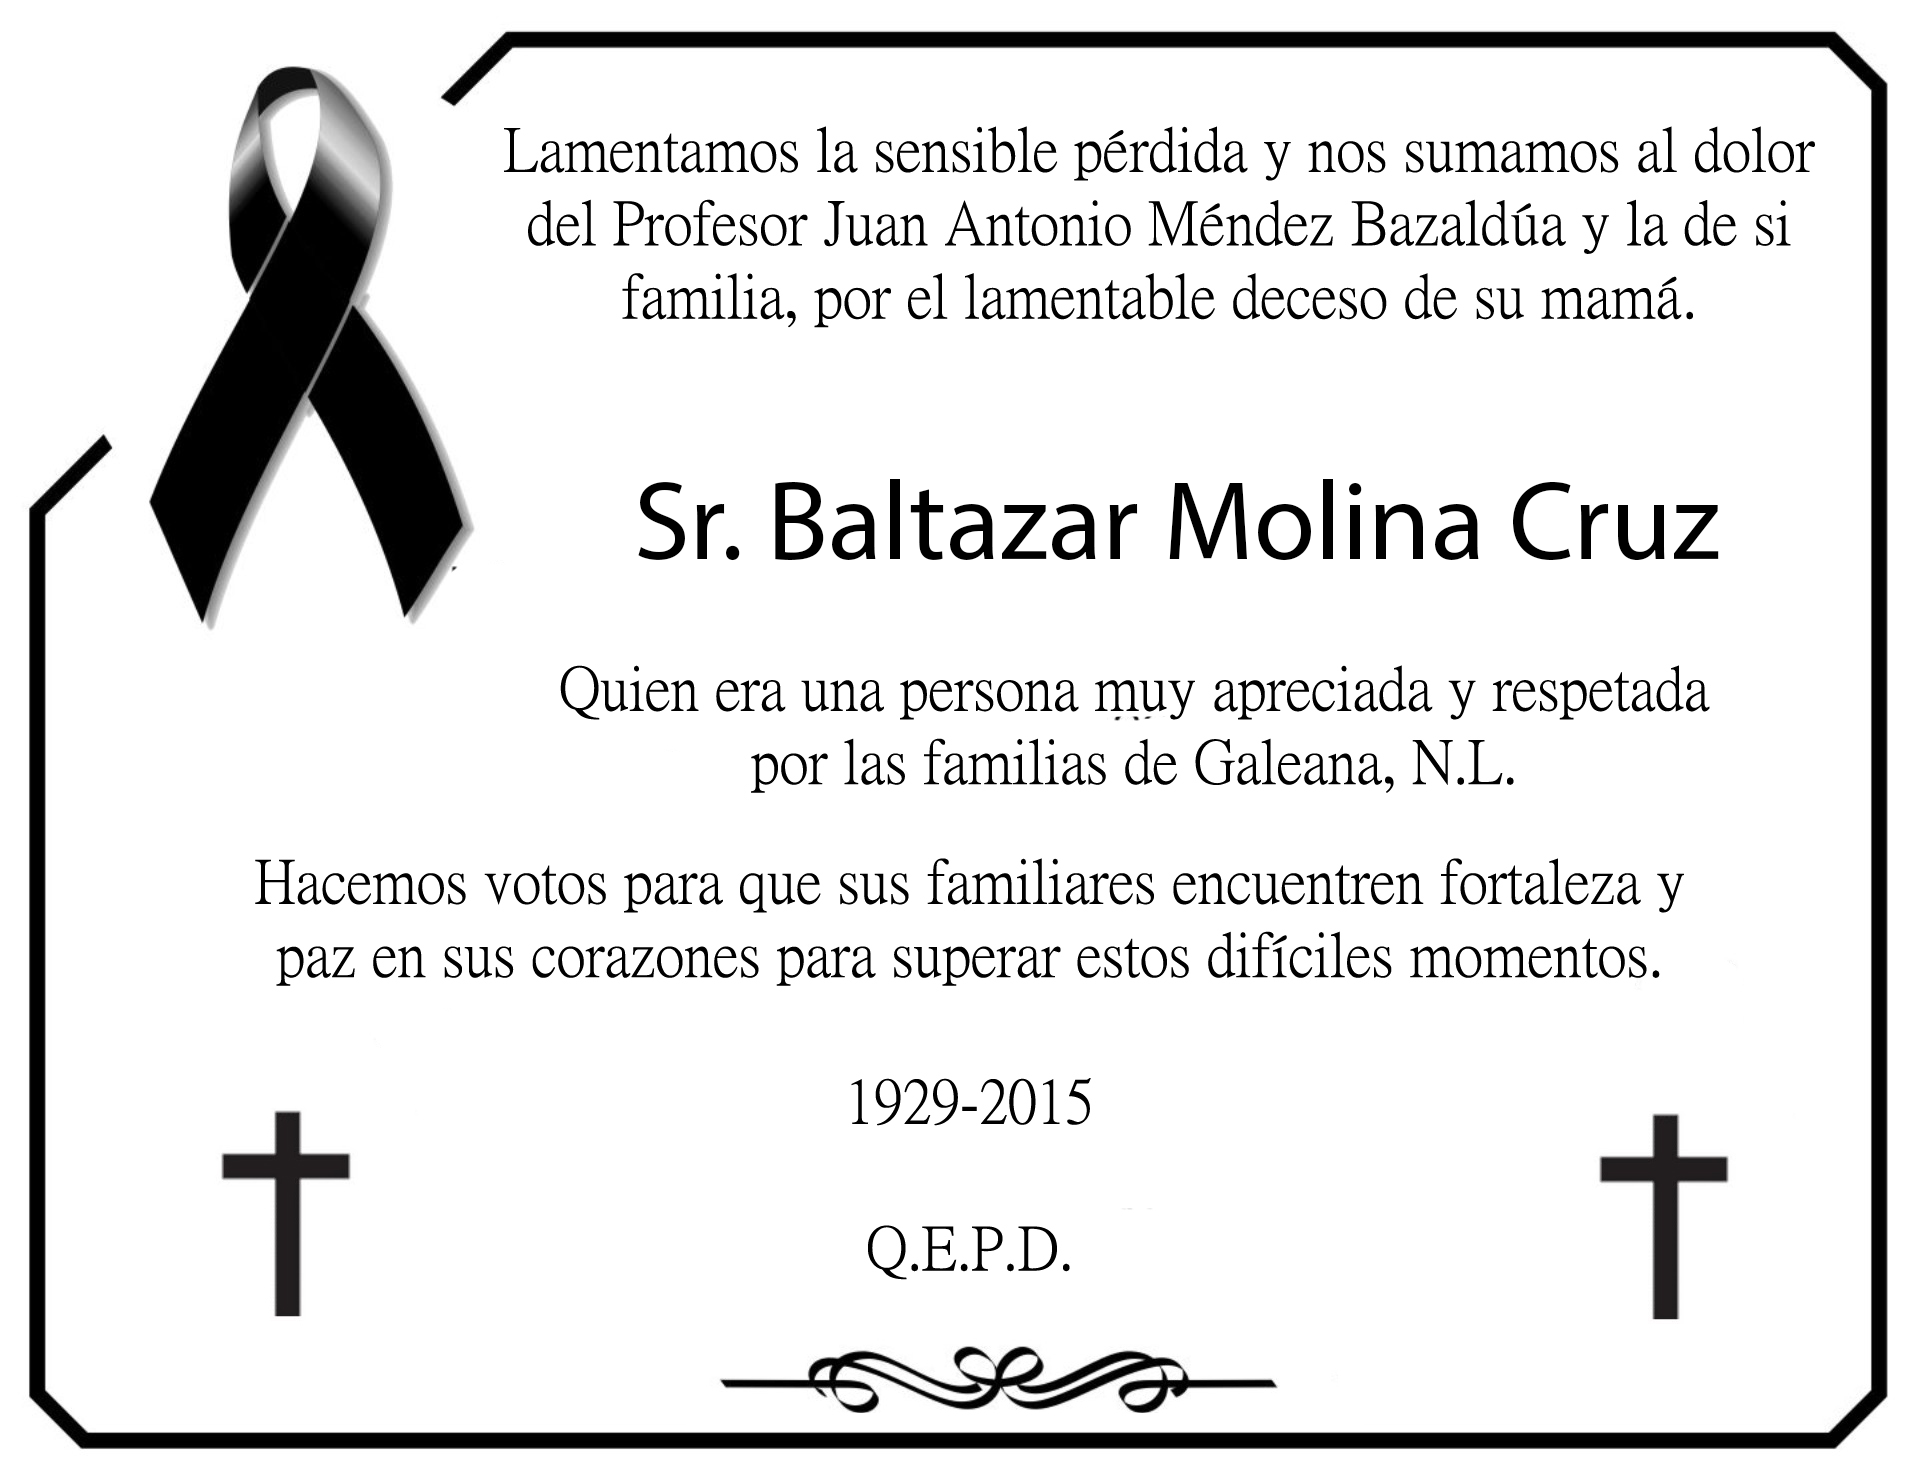 Baltazar Molina Cruz